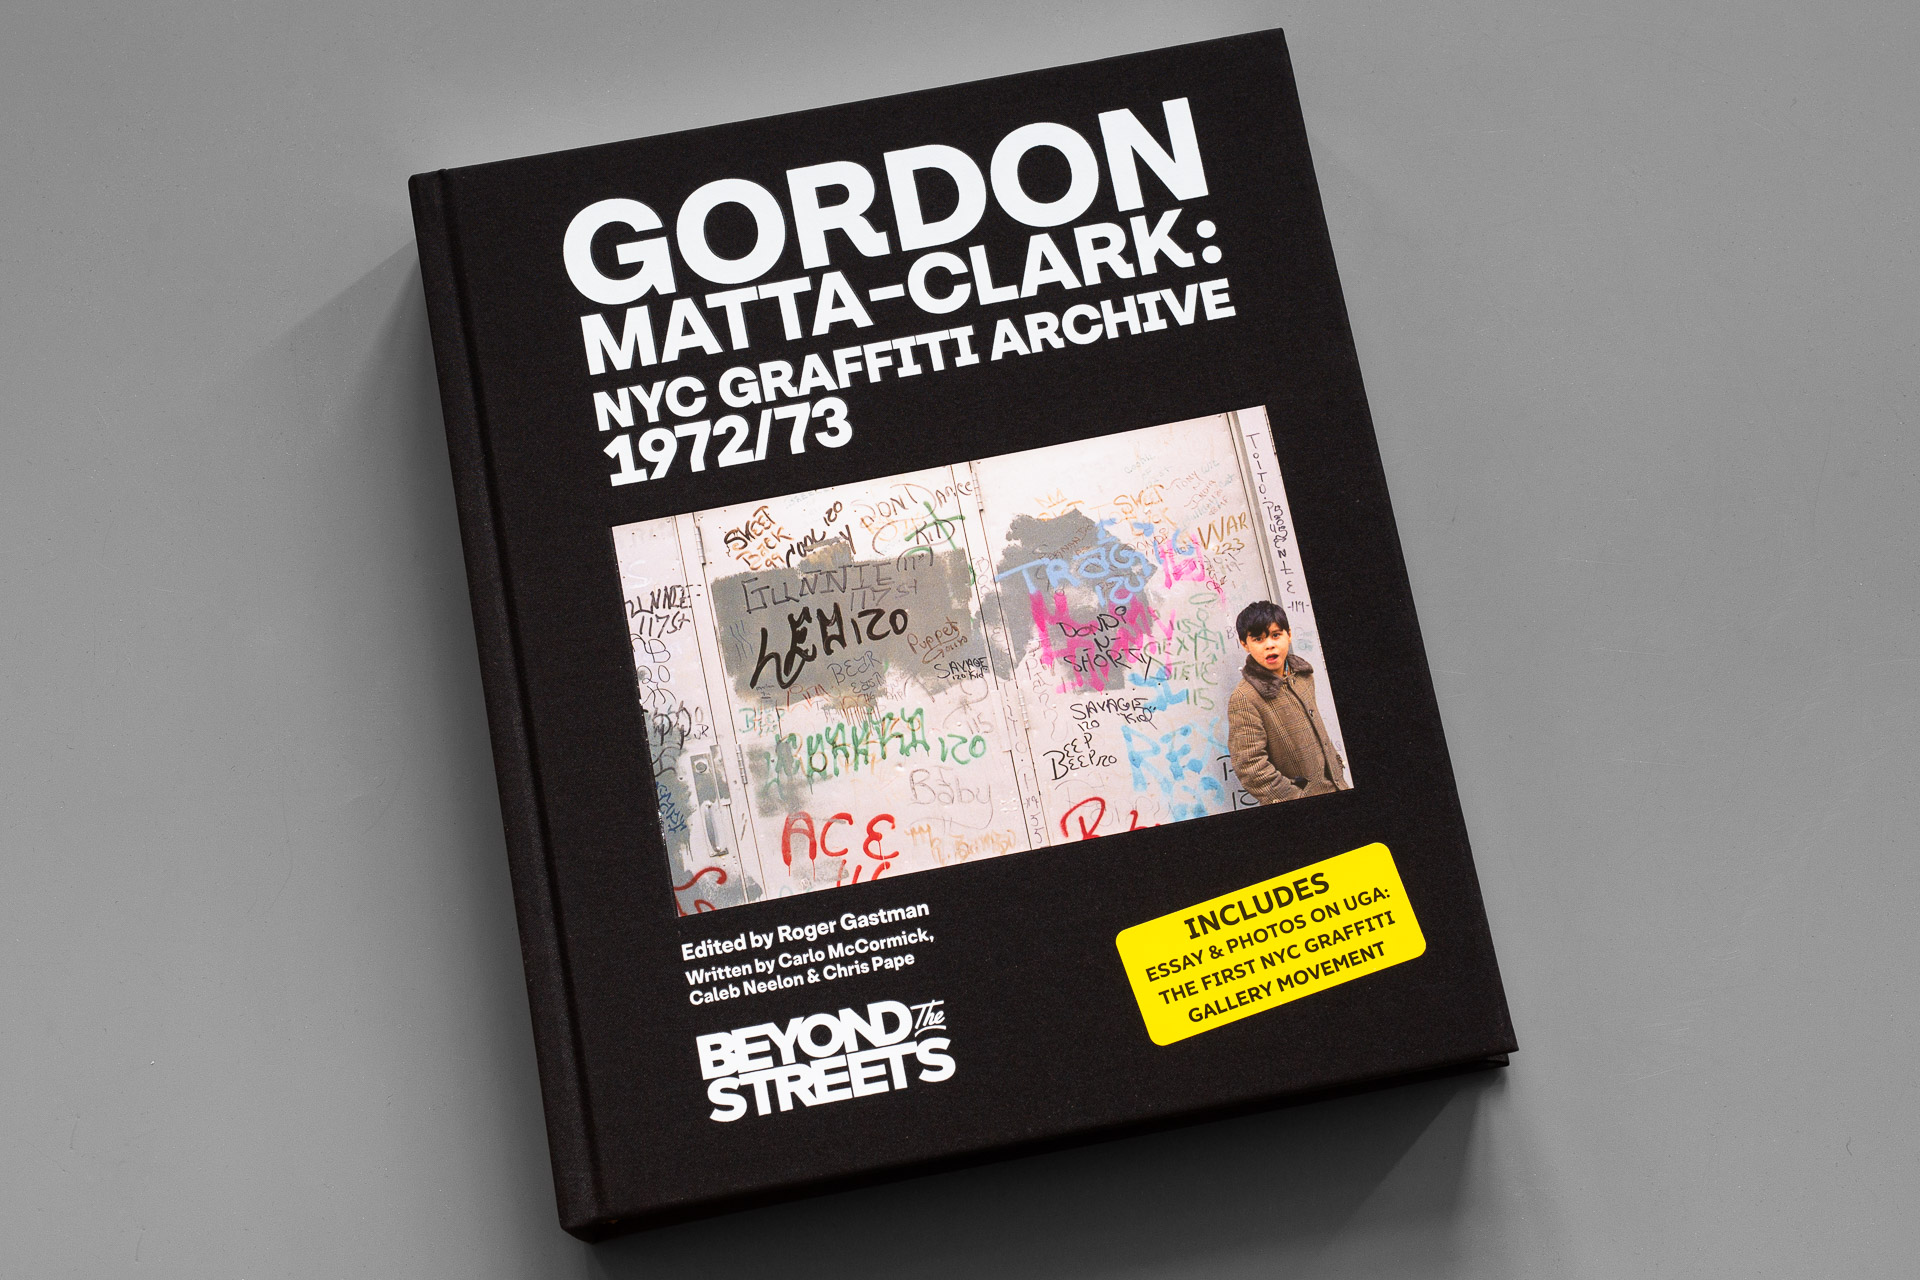 Gordon_Matta-Clark_NYC_Graffiti_Archive_1972-1973-2